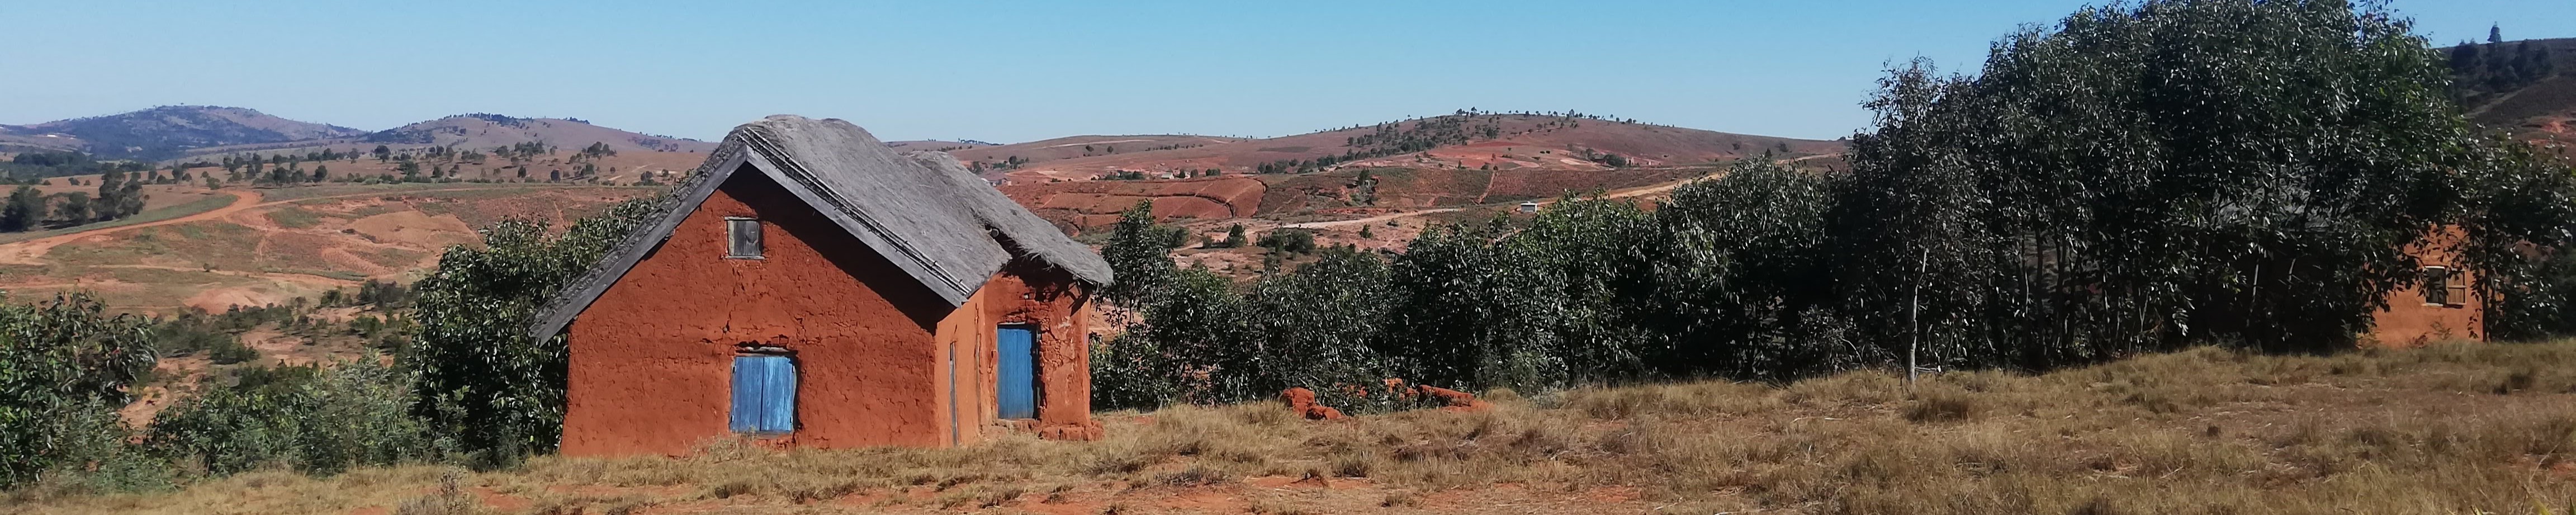 Panorama Antsirabe et sa région